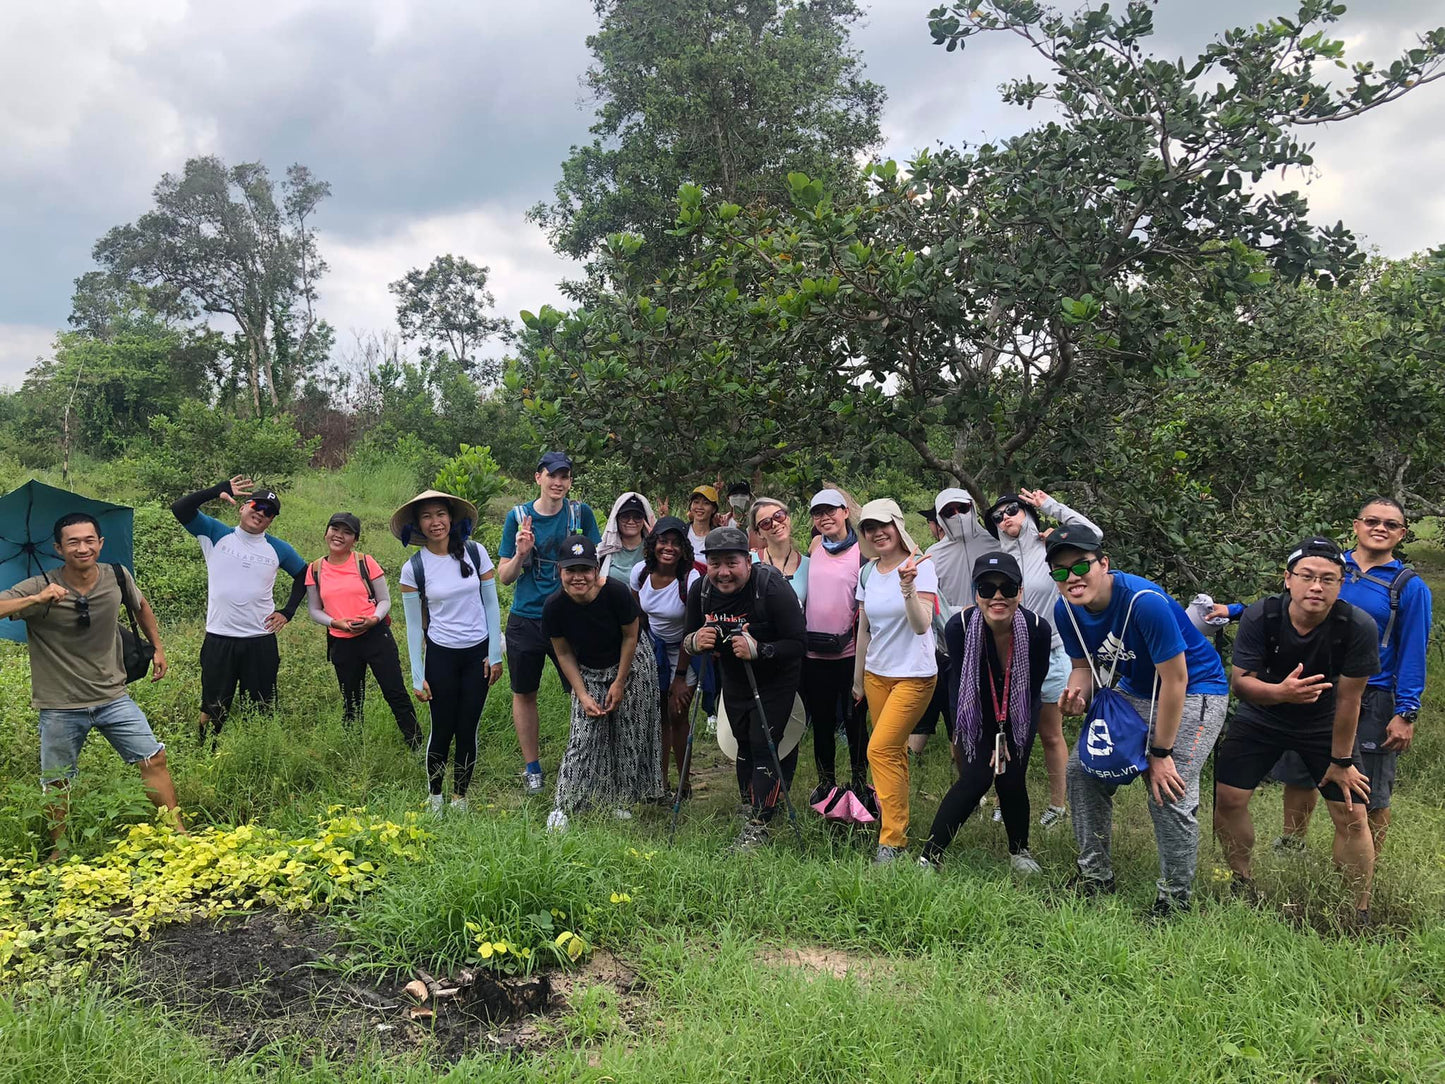 31A: 빈차우(Binh Chau) 자연보호구역: 원시 열대 서식지